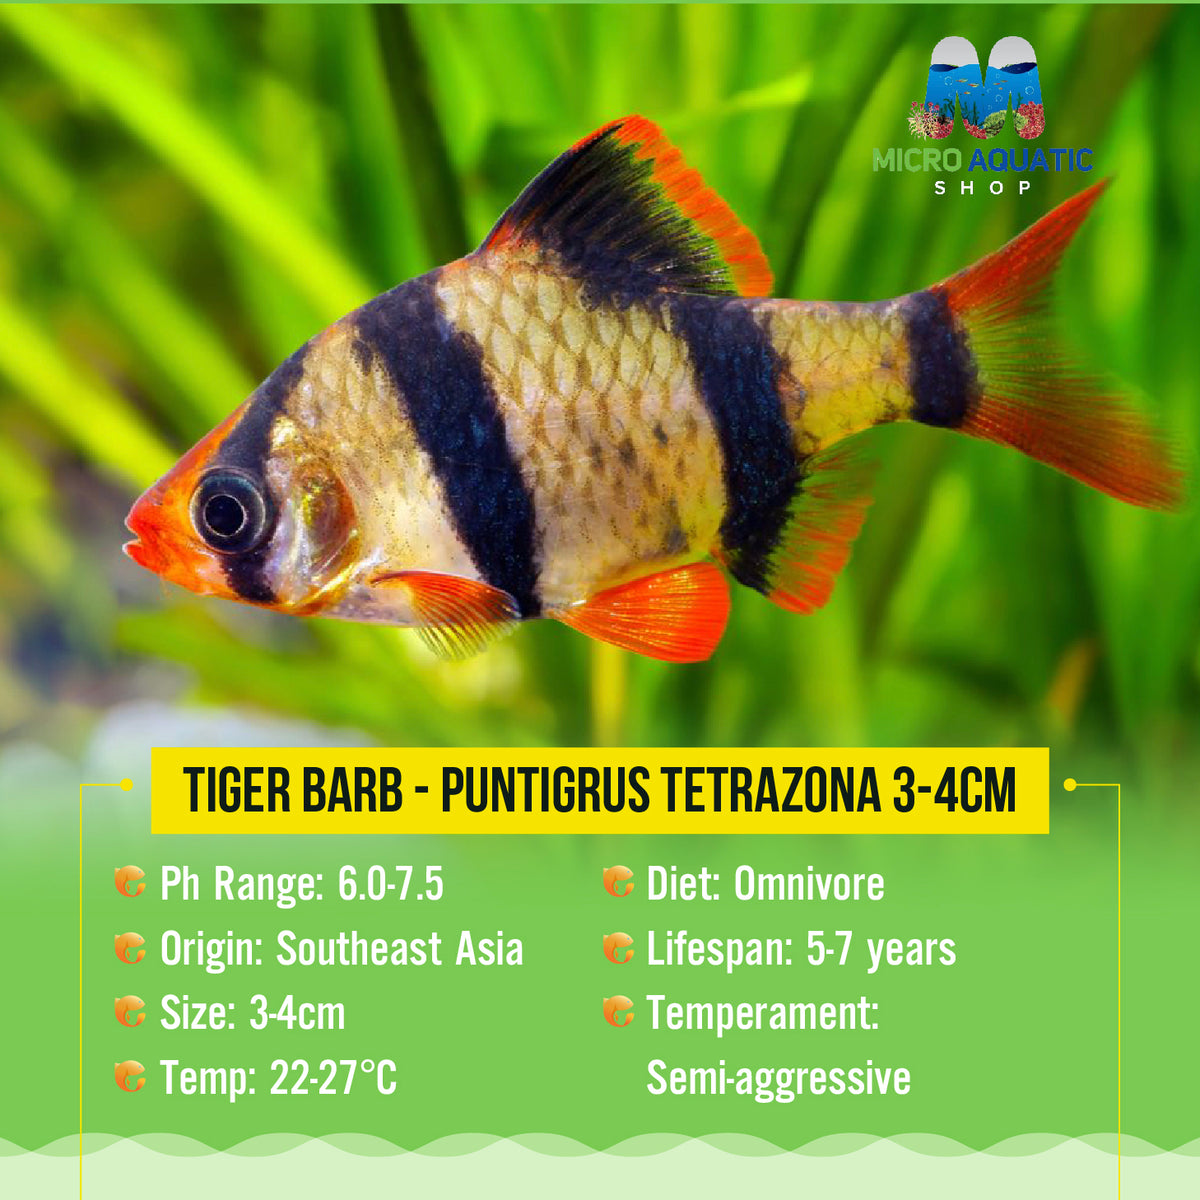 Tiger Barb - Puntigrus tetrazona 3-4cm